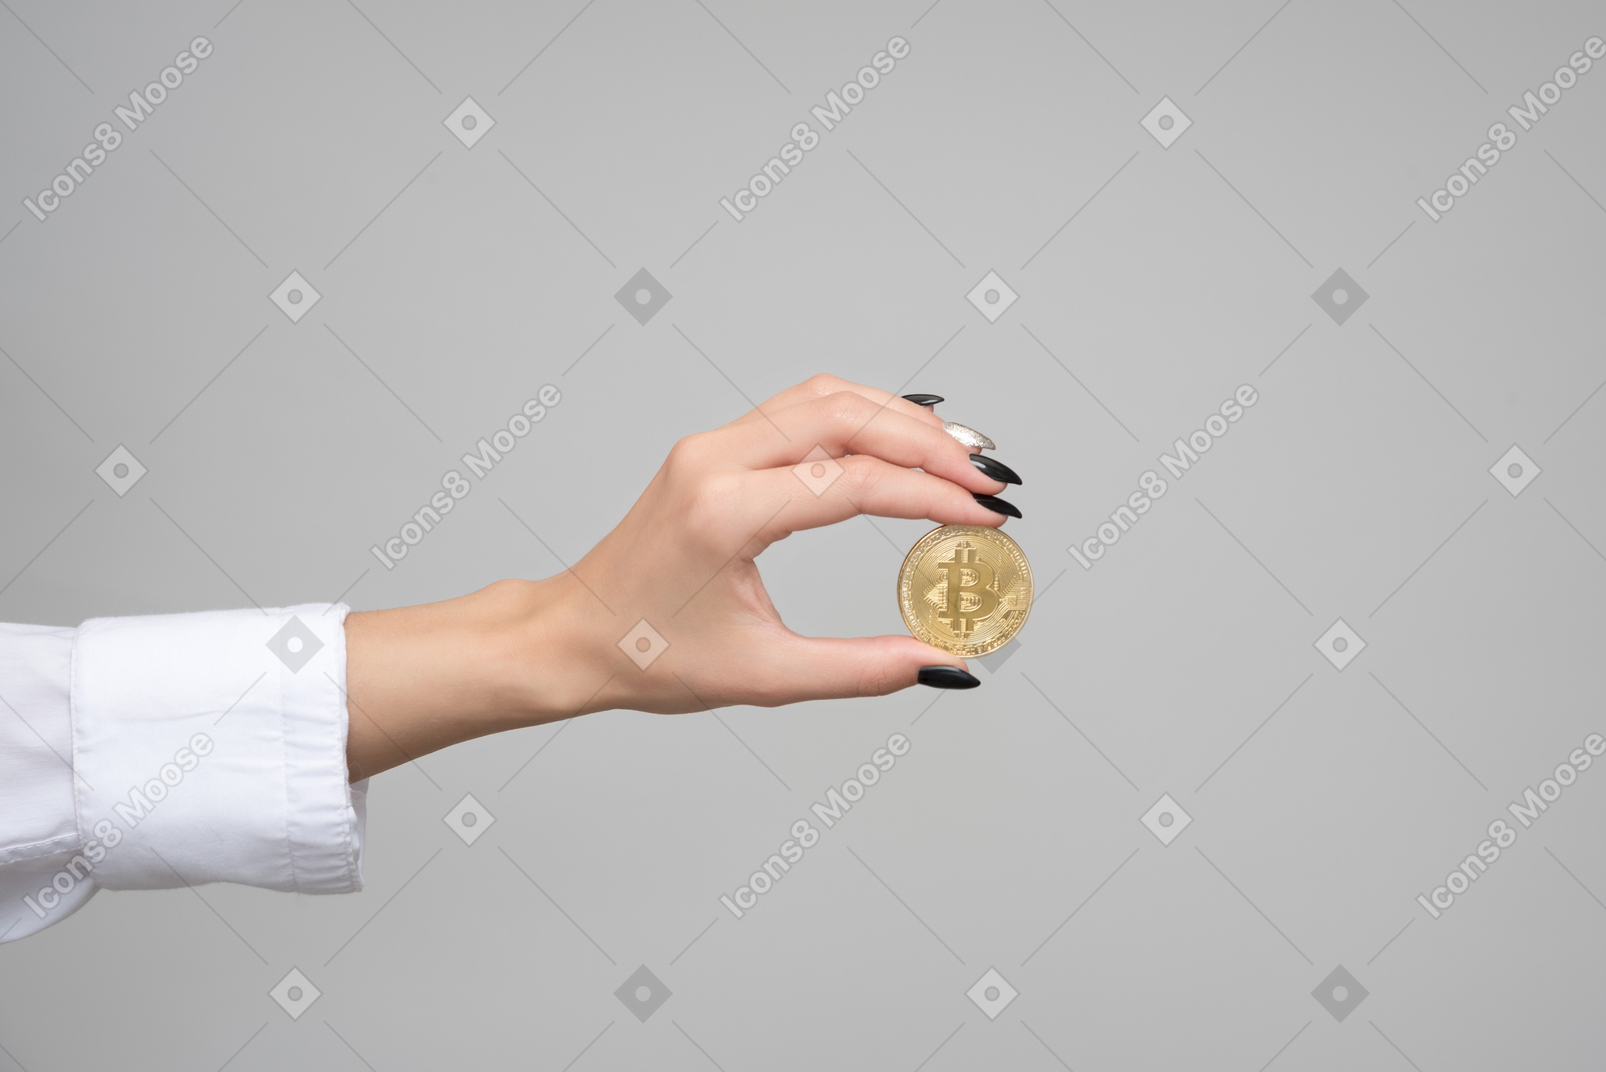 Female hand holding a golden bitcoin